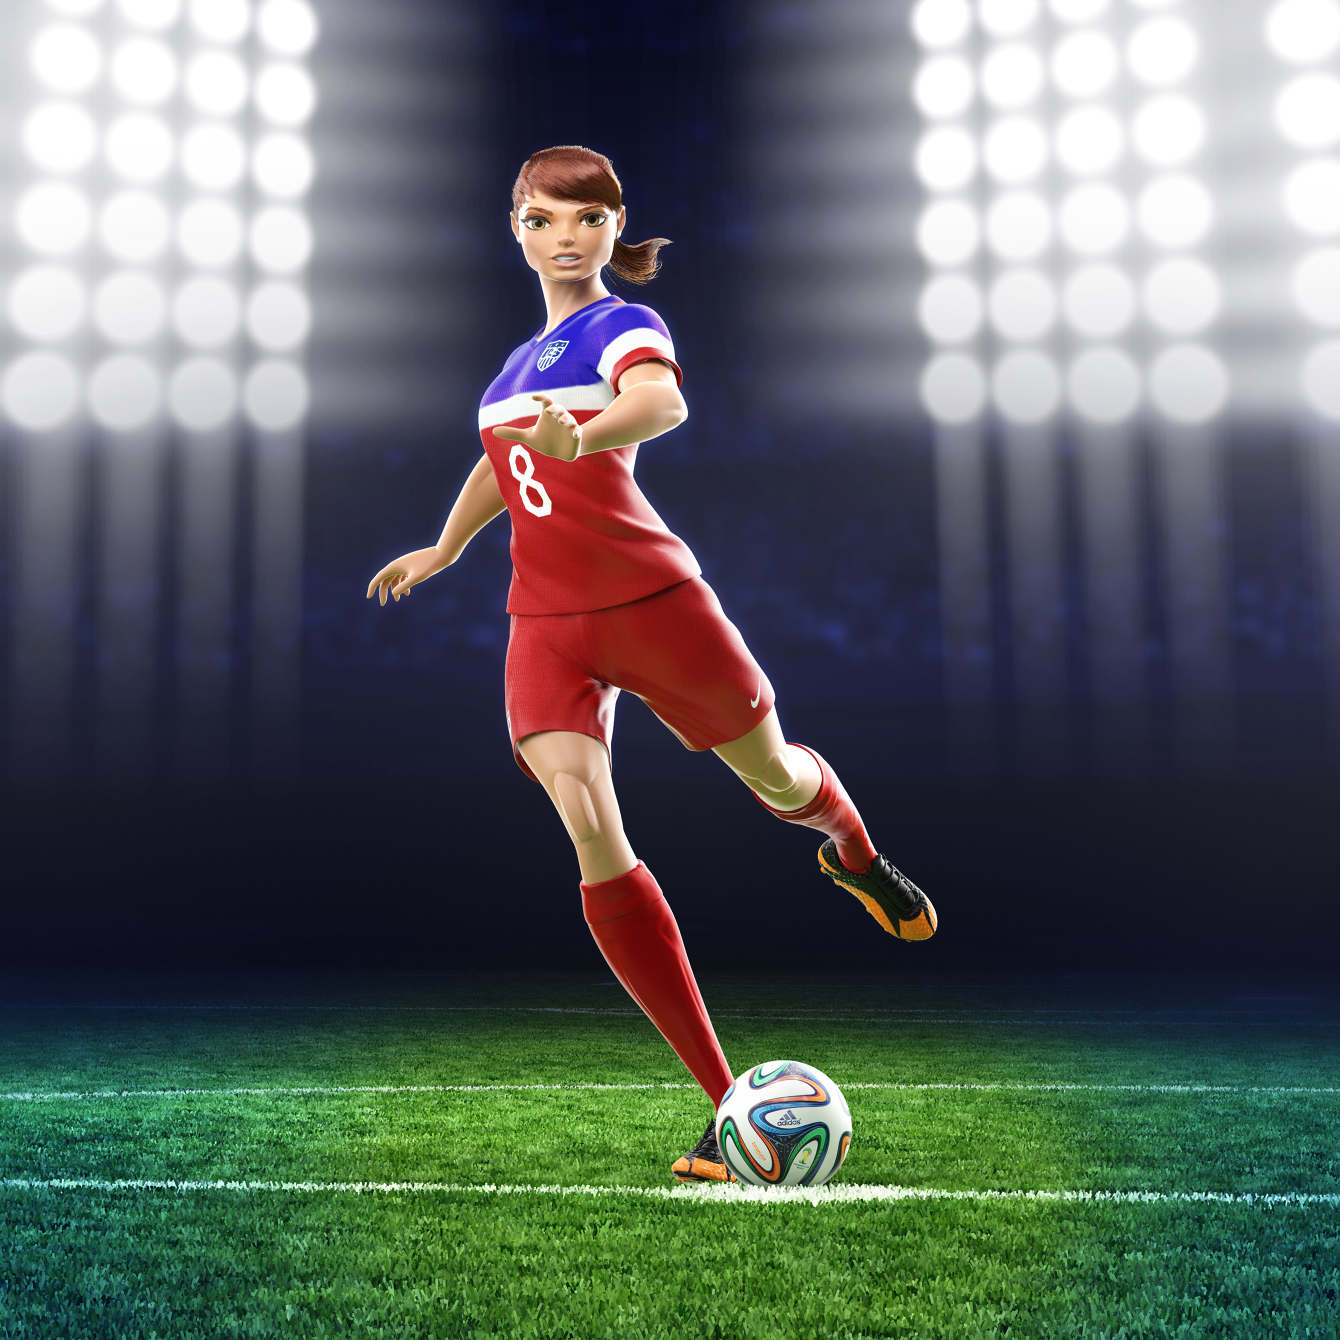 sports-character-design-soccer_W_1340_c.jpg